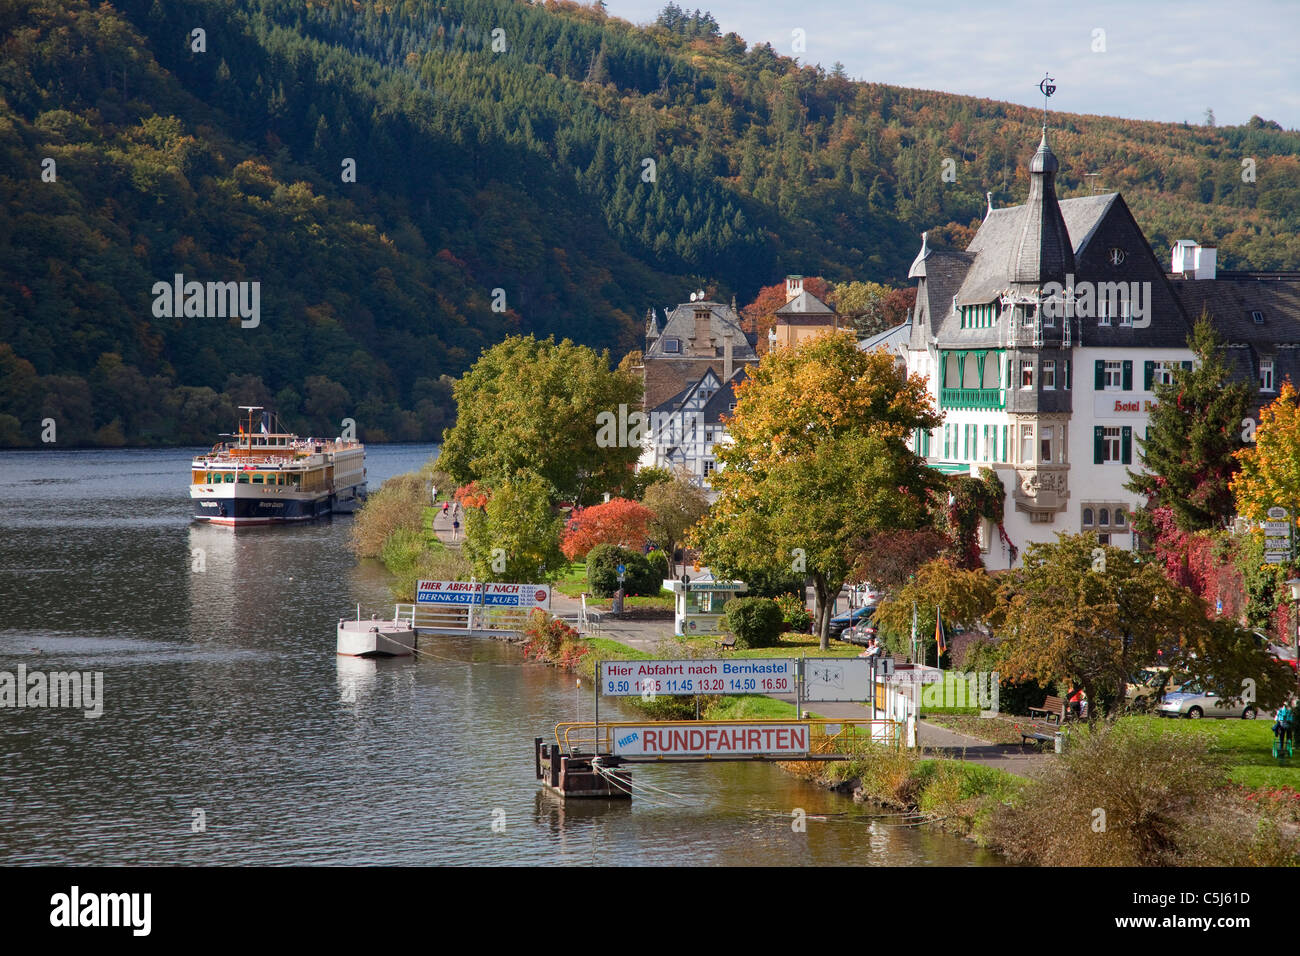 Herbstimmung am Moselufer, Hotel Bellevue, Schiffsanleger fuer Moselrundfahrten, Hotel at the riverbank, autumn, Moselle Stock Photo